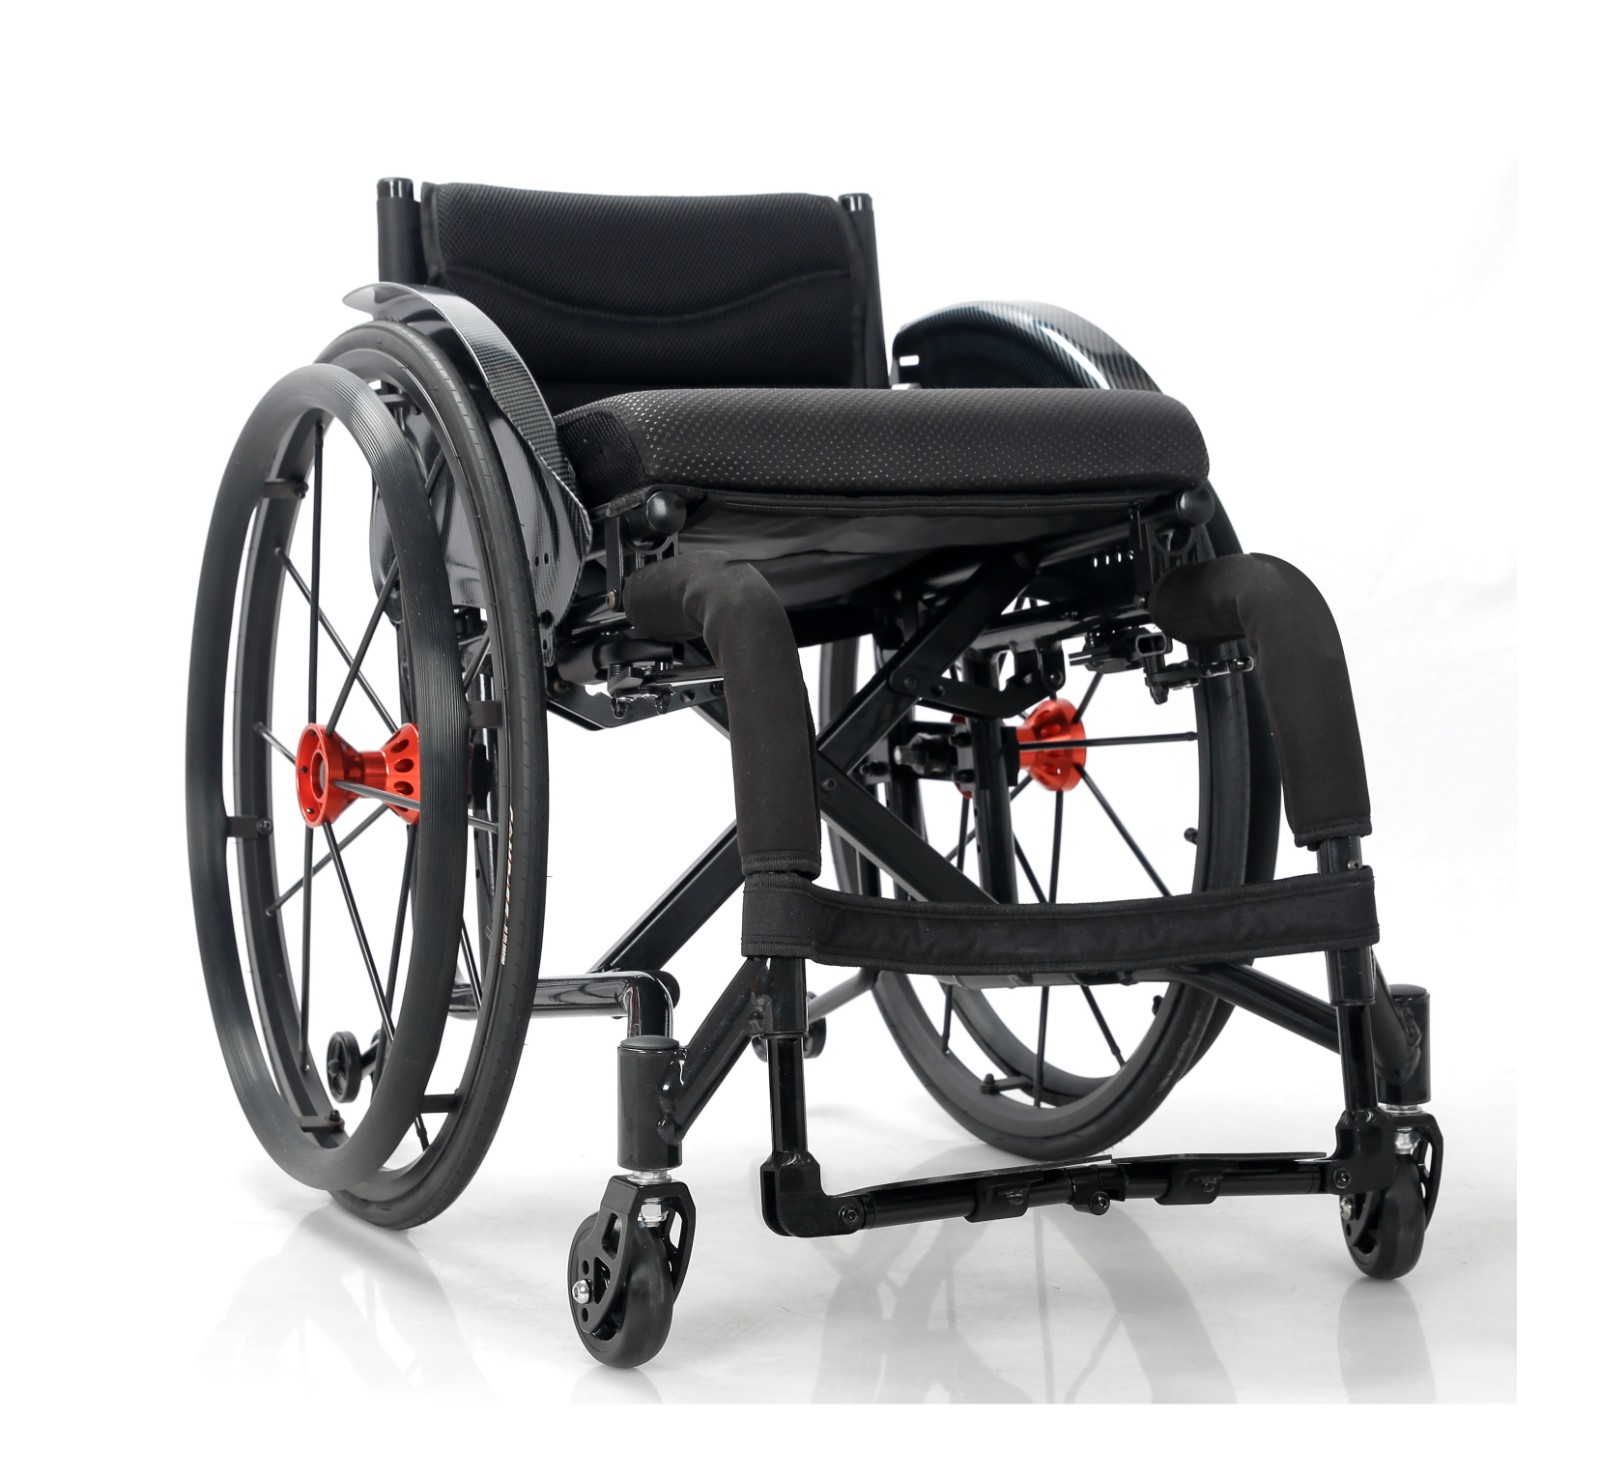 Foldable Delux lightweight sport wheelchair